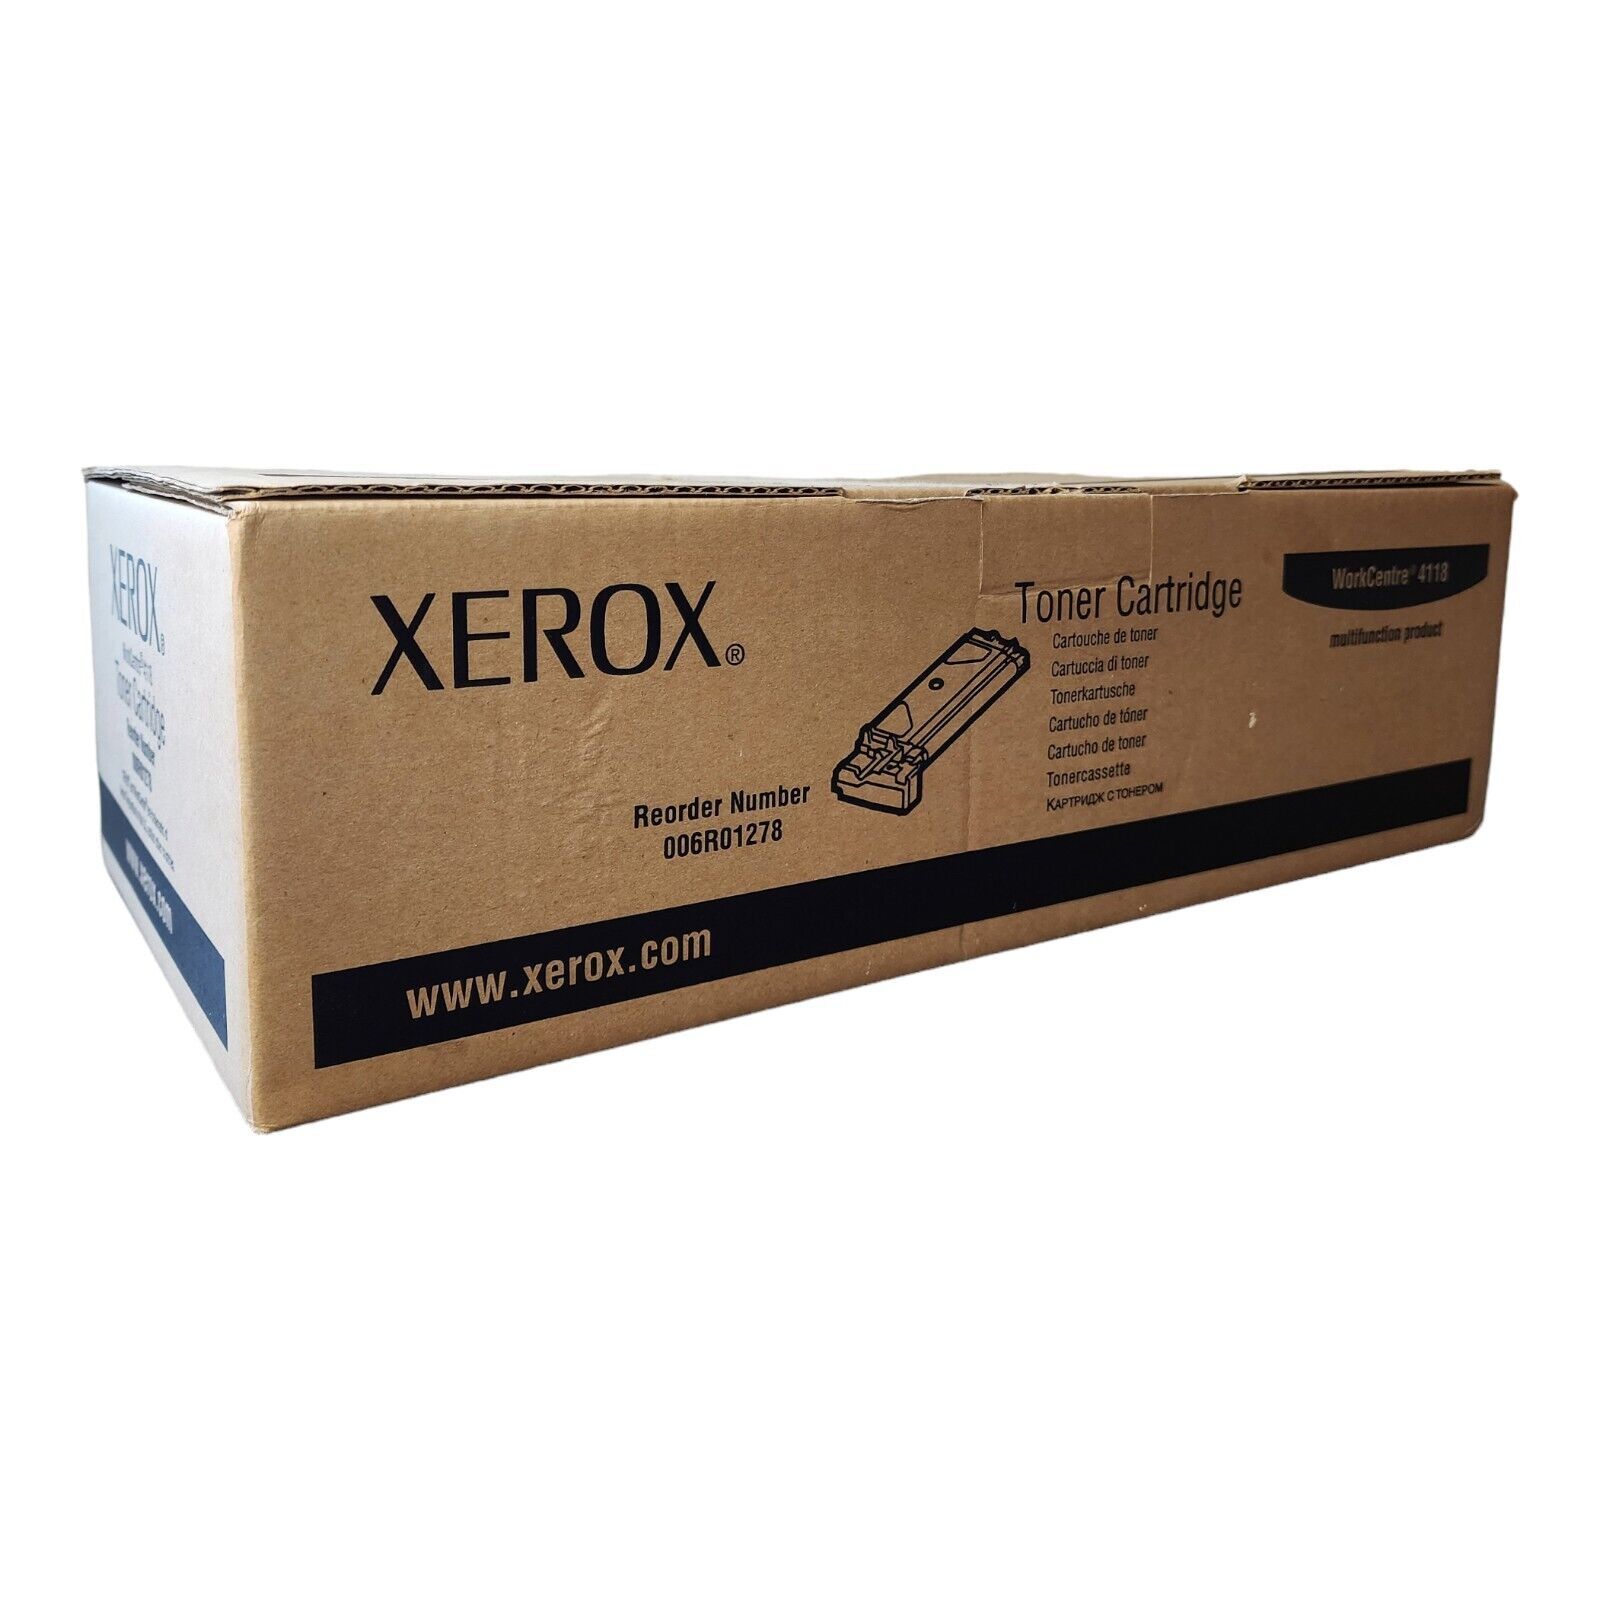 Xerox 006R01278 Black Toner Cartridge WorkCentre 4118 FaxCentre 2218 Genuine 